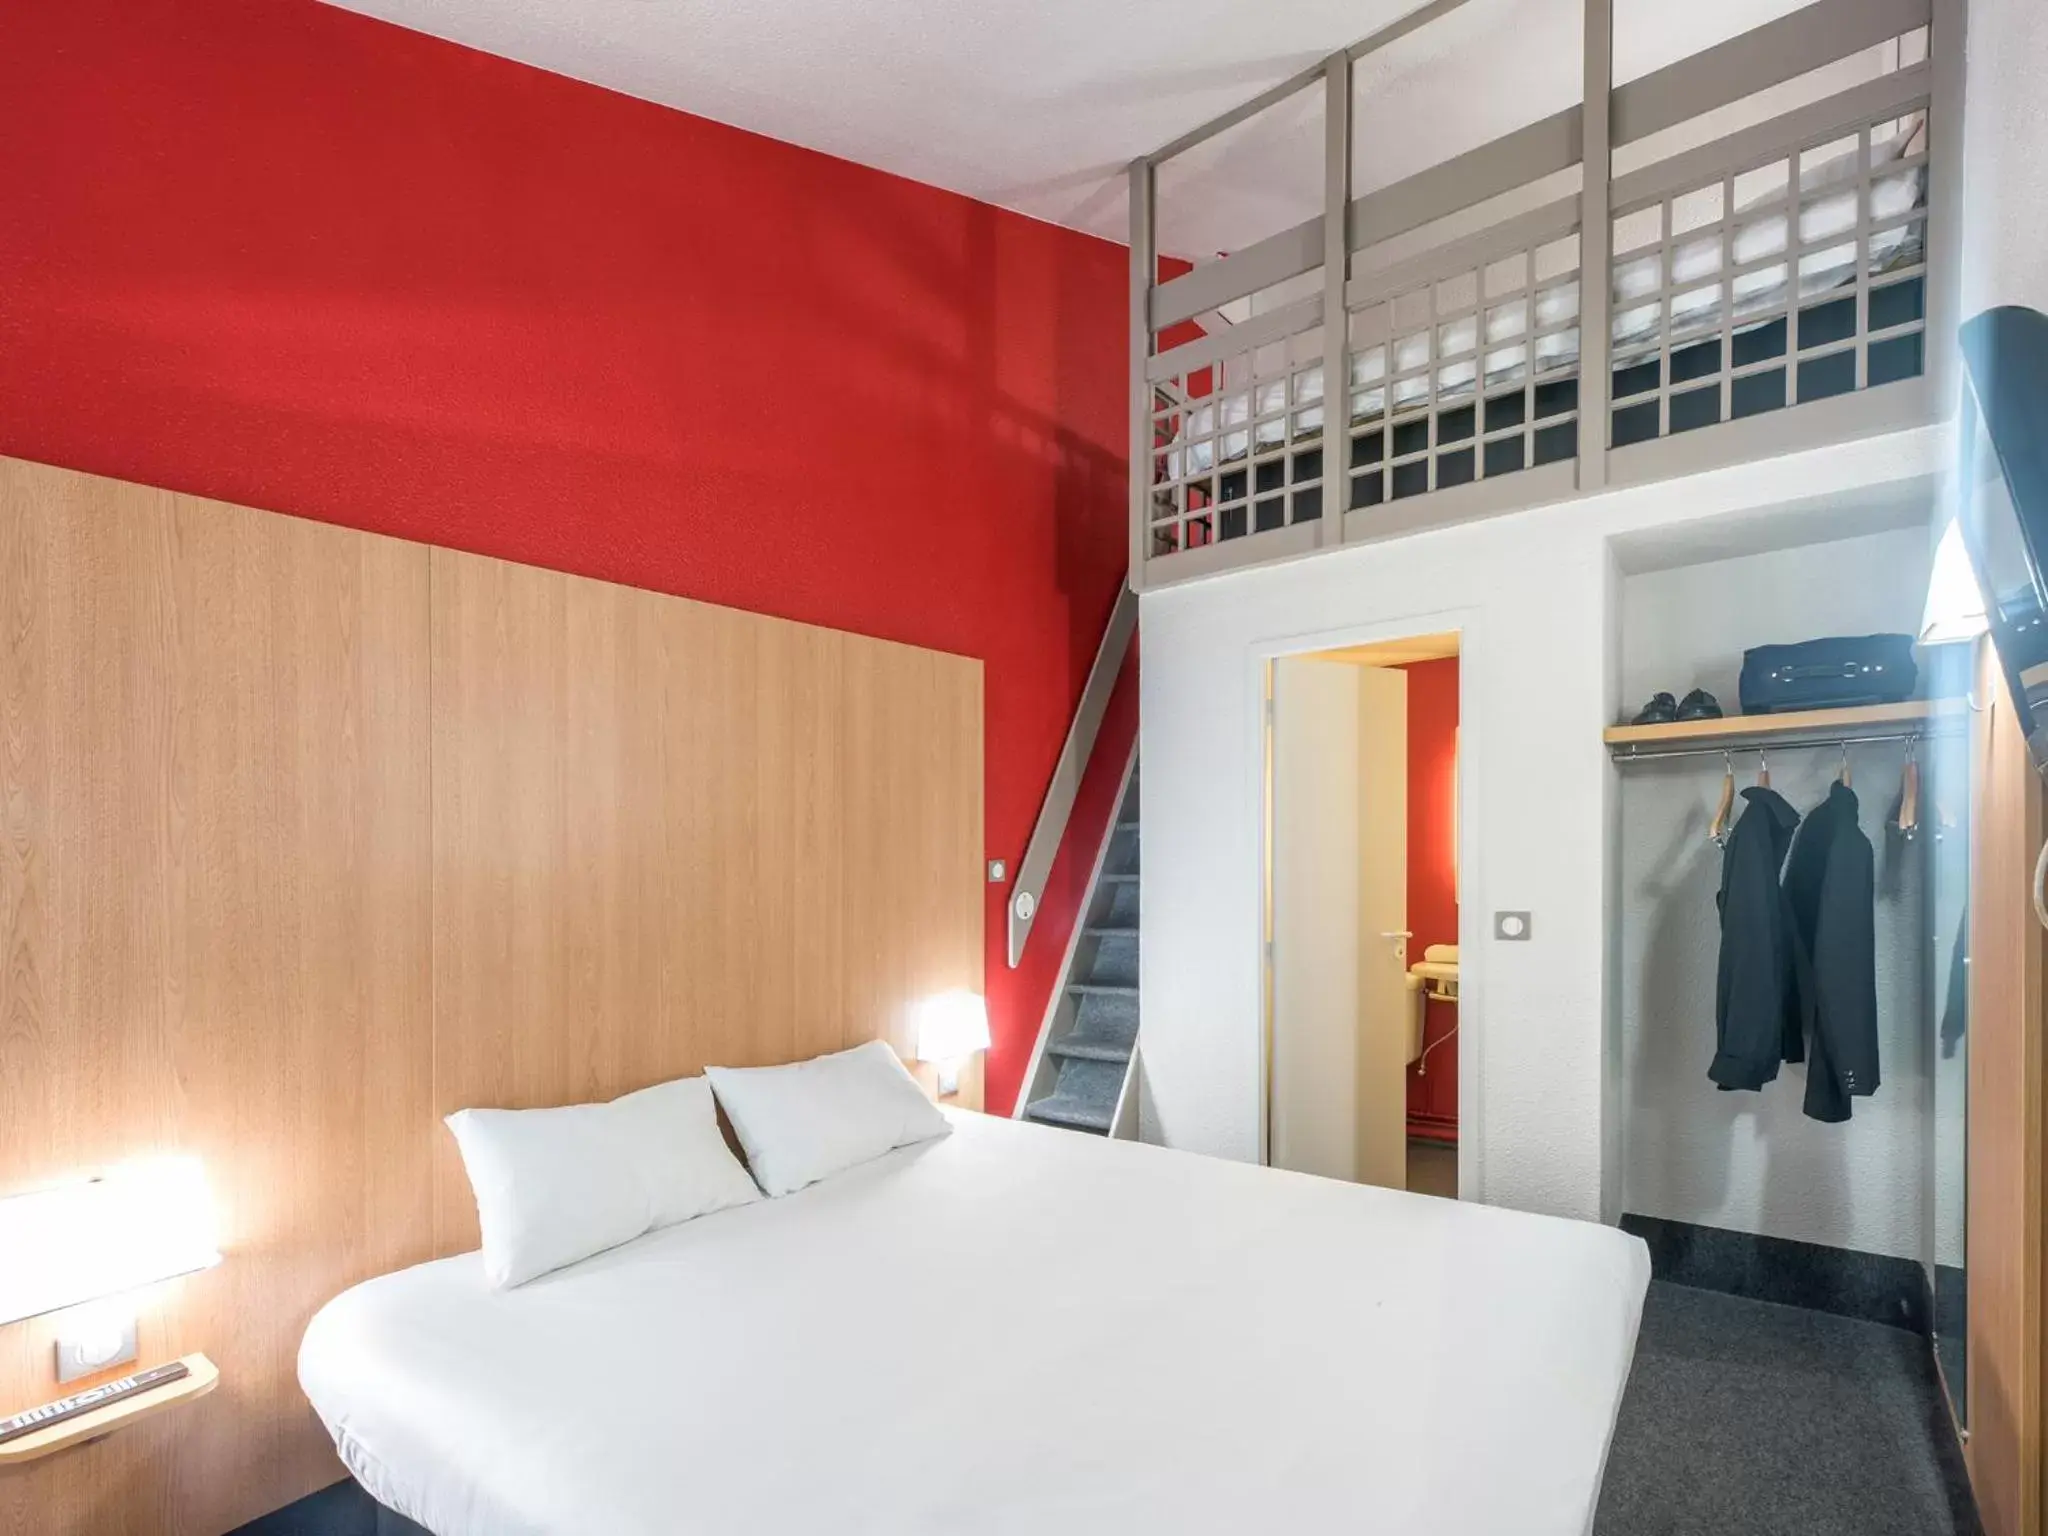 Photo of the whole room, Bed in B&B HOTEL Brest Kergaradec Aéroport Gouesnou